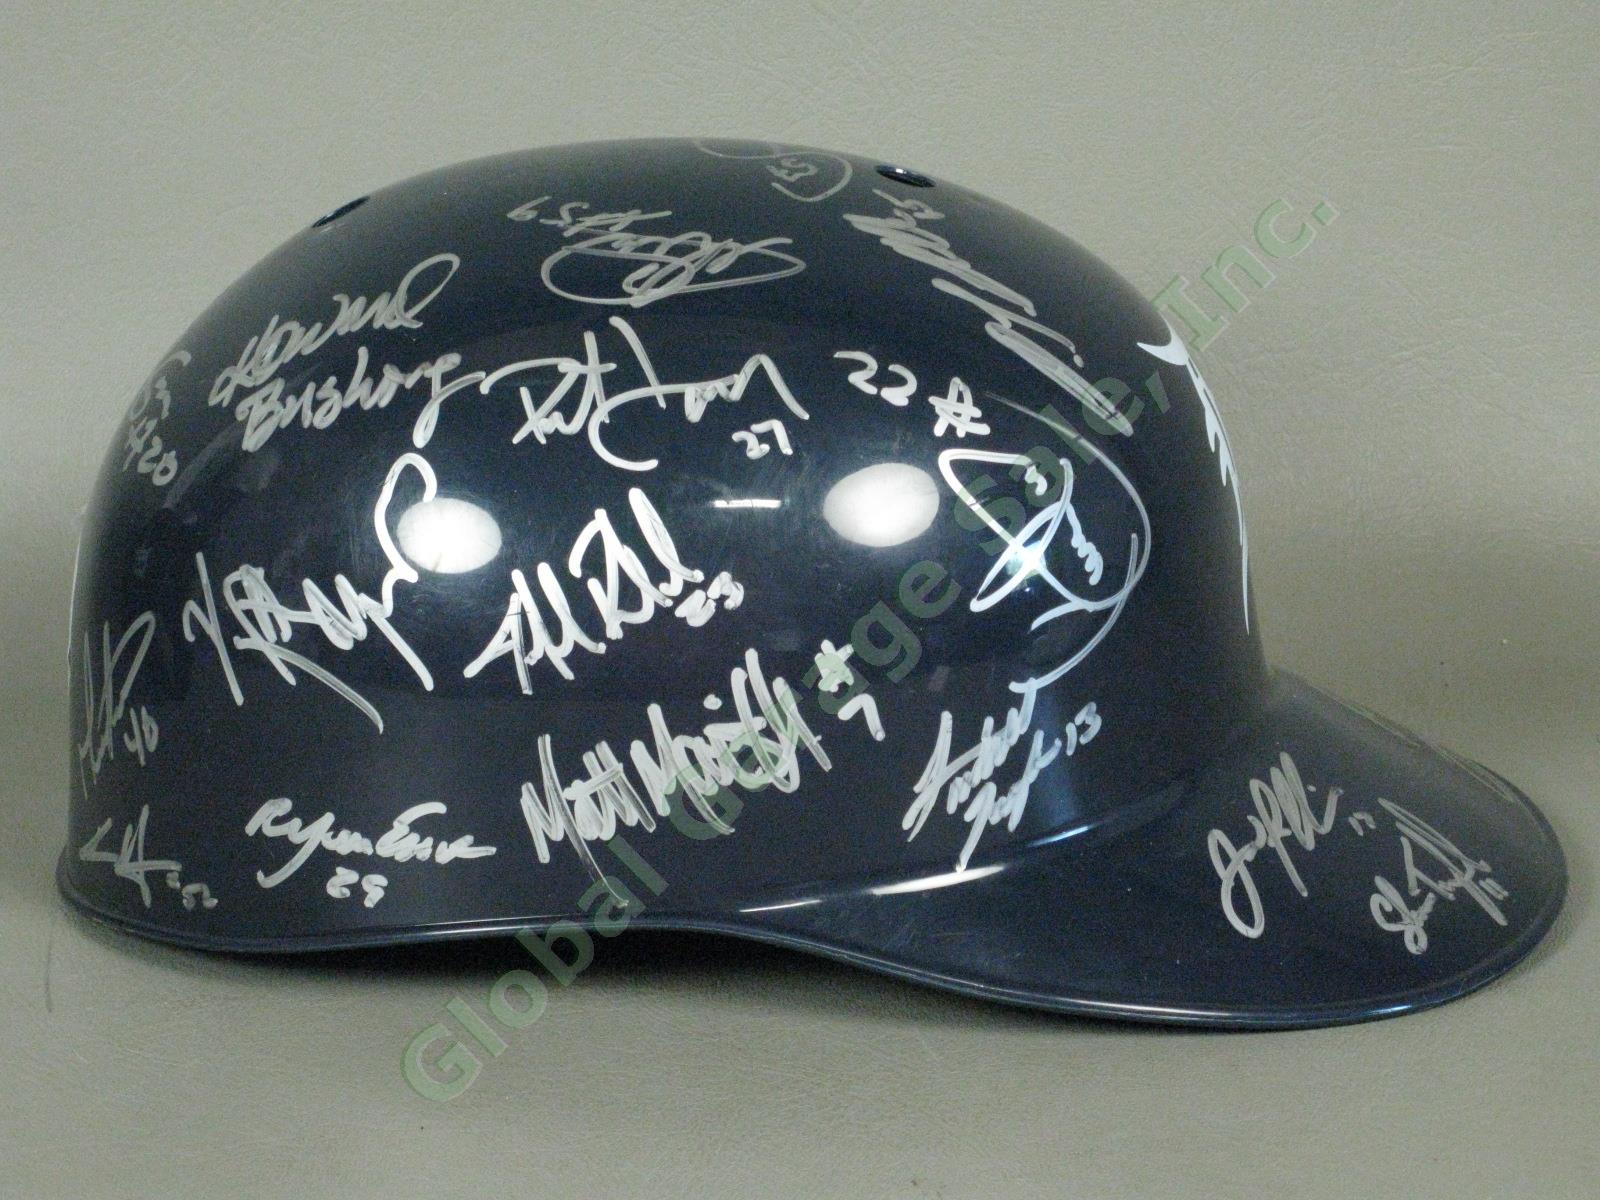 2010 Connecticut Tigers Team Signed Baseball Helmet MiLB MLB NYPL Detroit NR 1